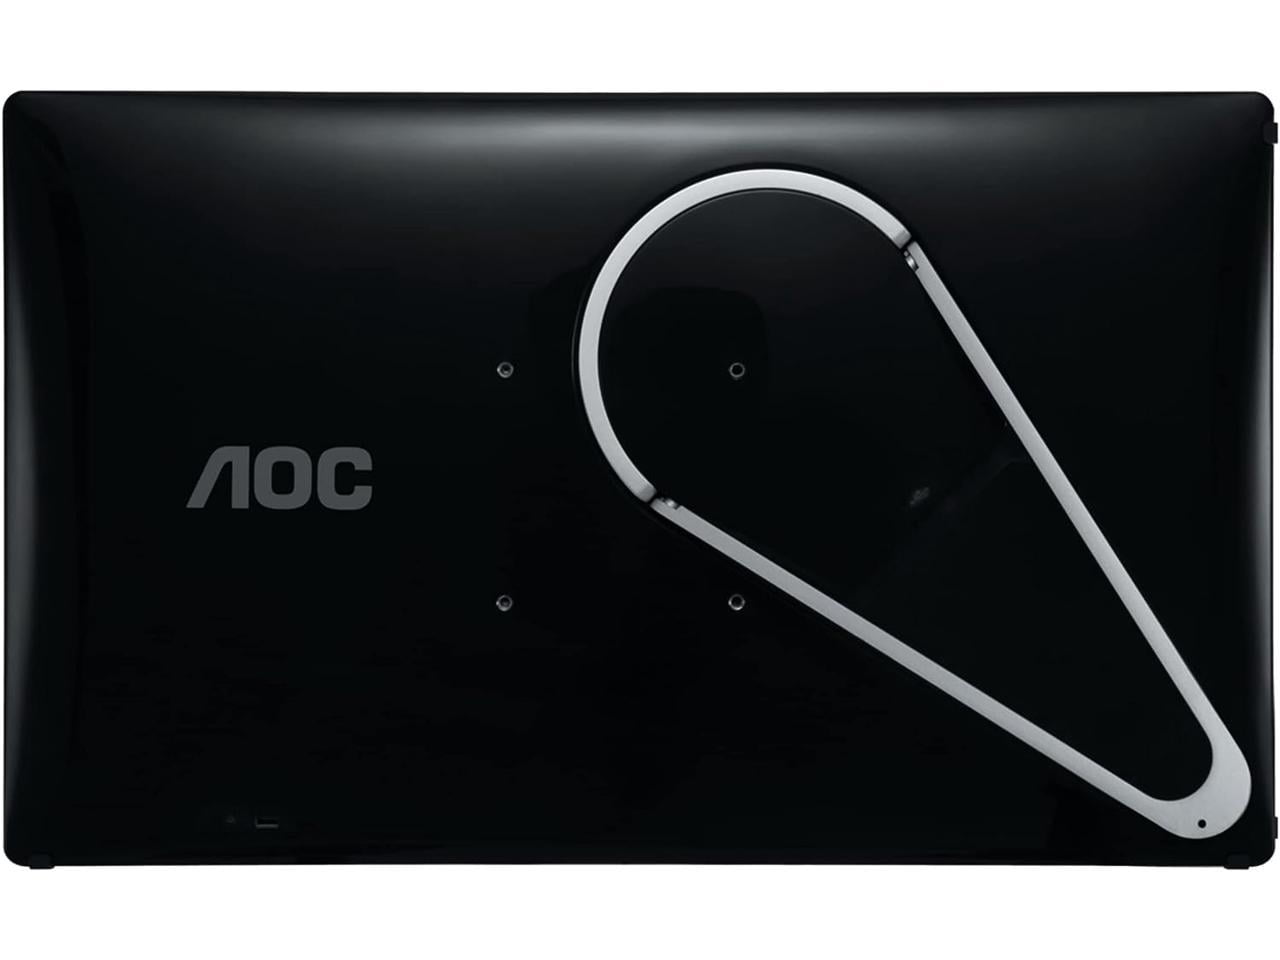 AOC E1659FWU 15.6 USB-3.0 Portable LED HD Monitor (USB) Glossy piano black  E1659FWU - Best Buy